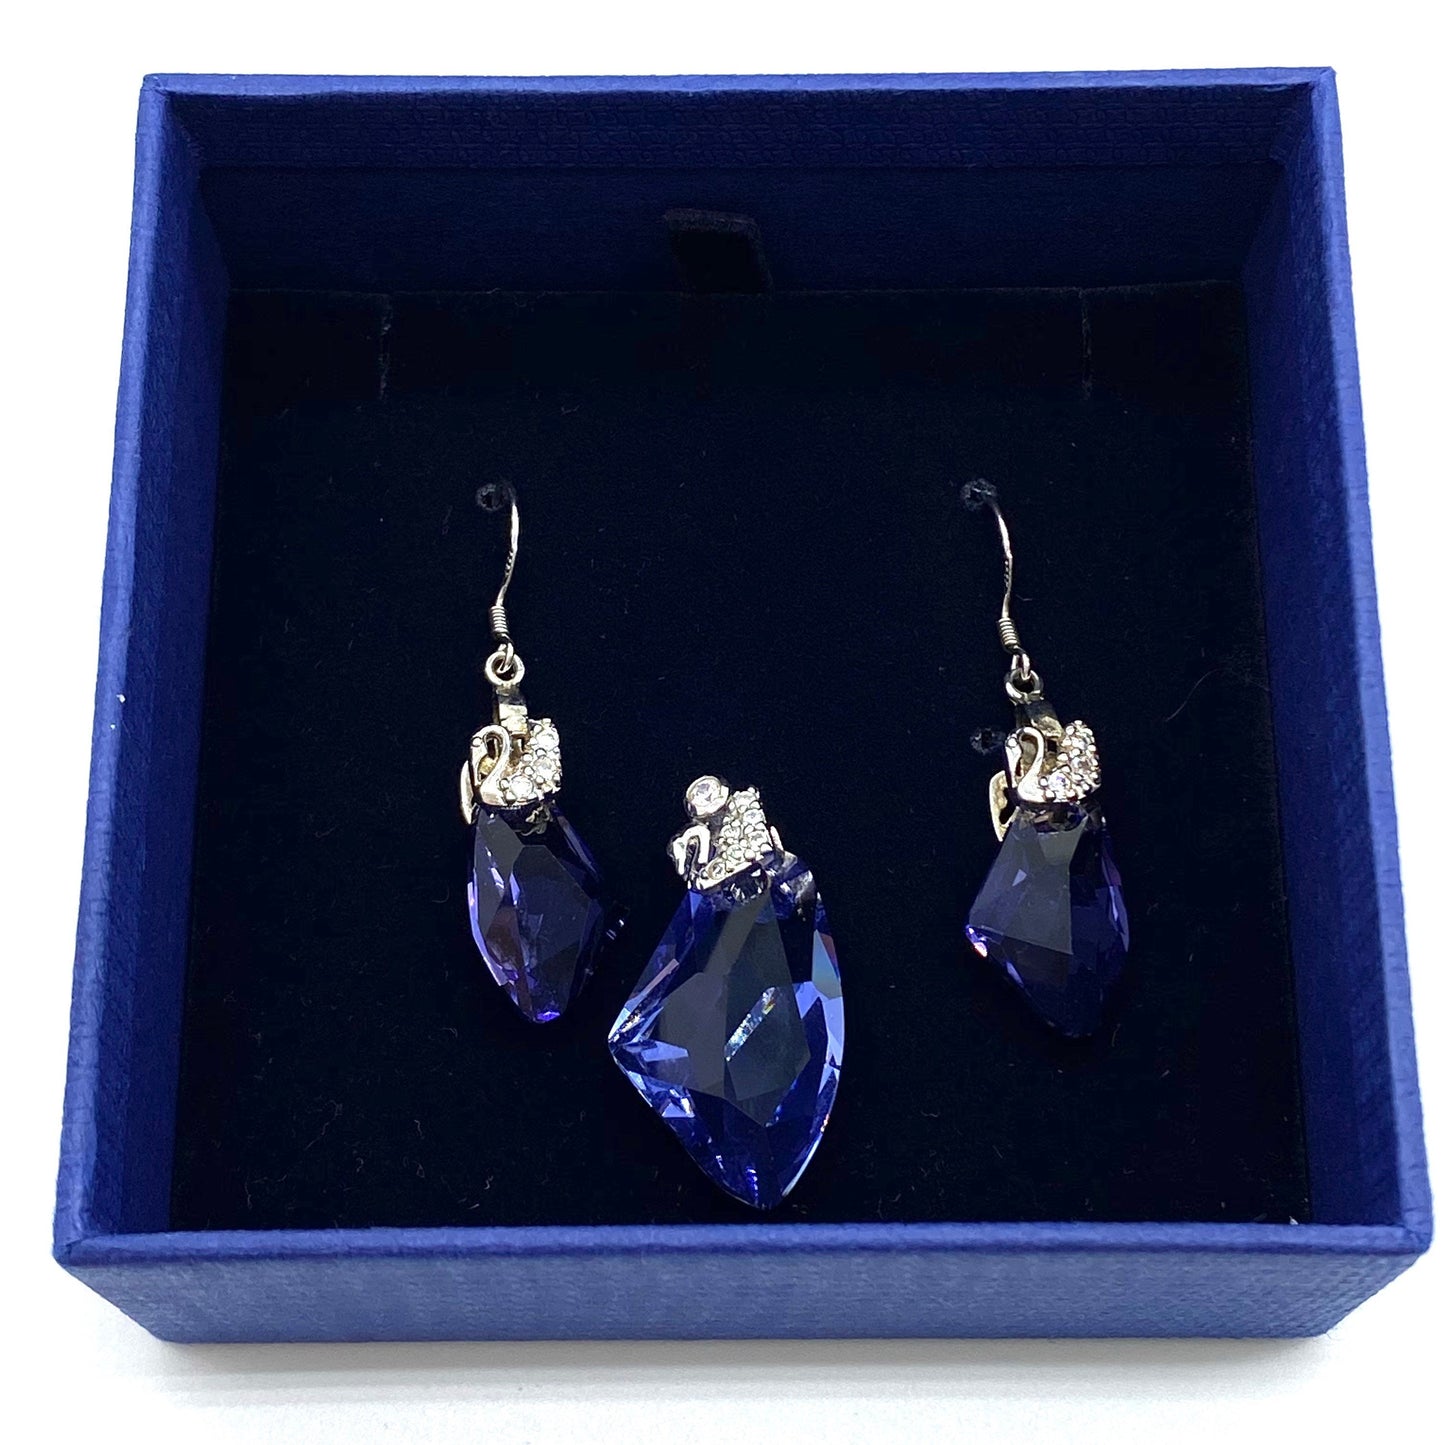 Swarovski Purple/Blue Crystal Pierced Earrings and Matching Pendant with Original Box